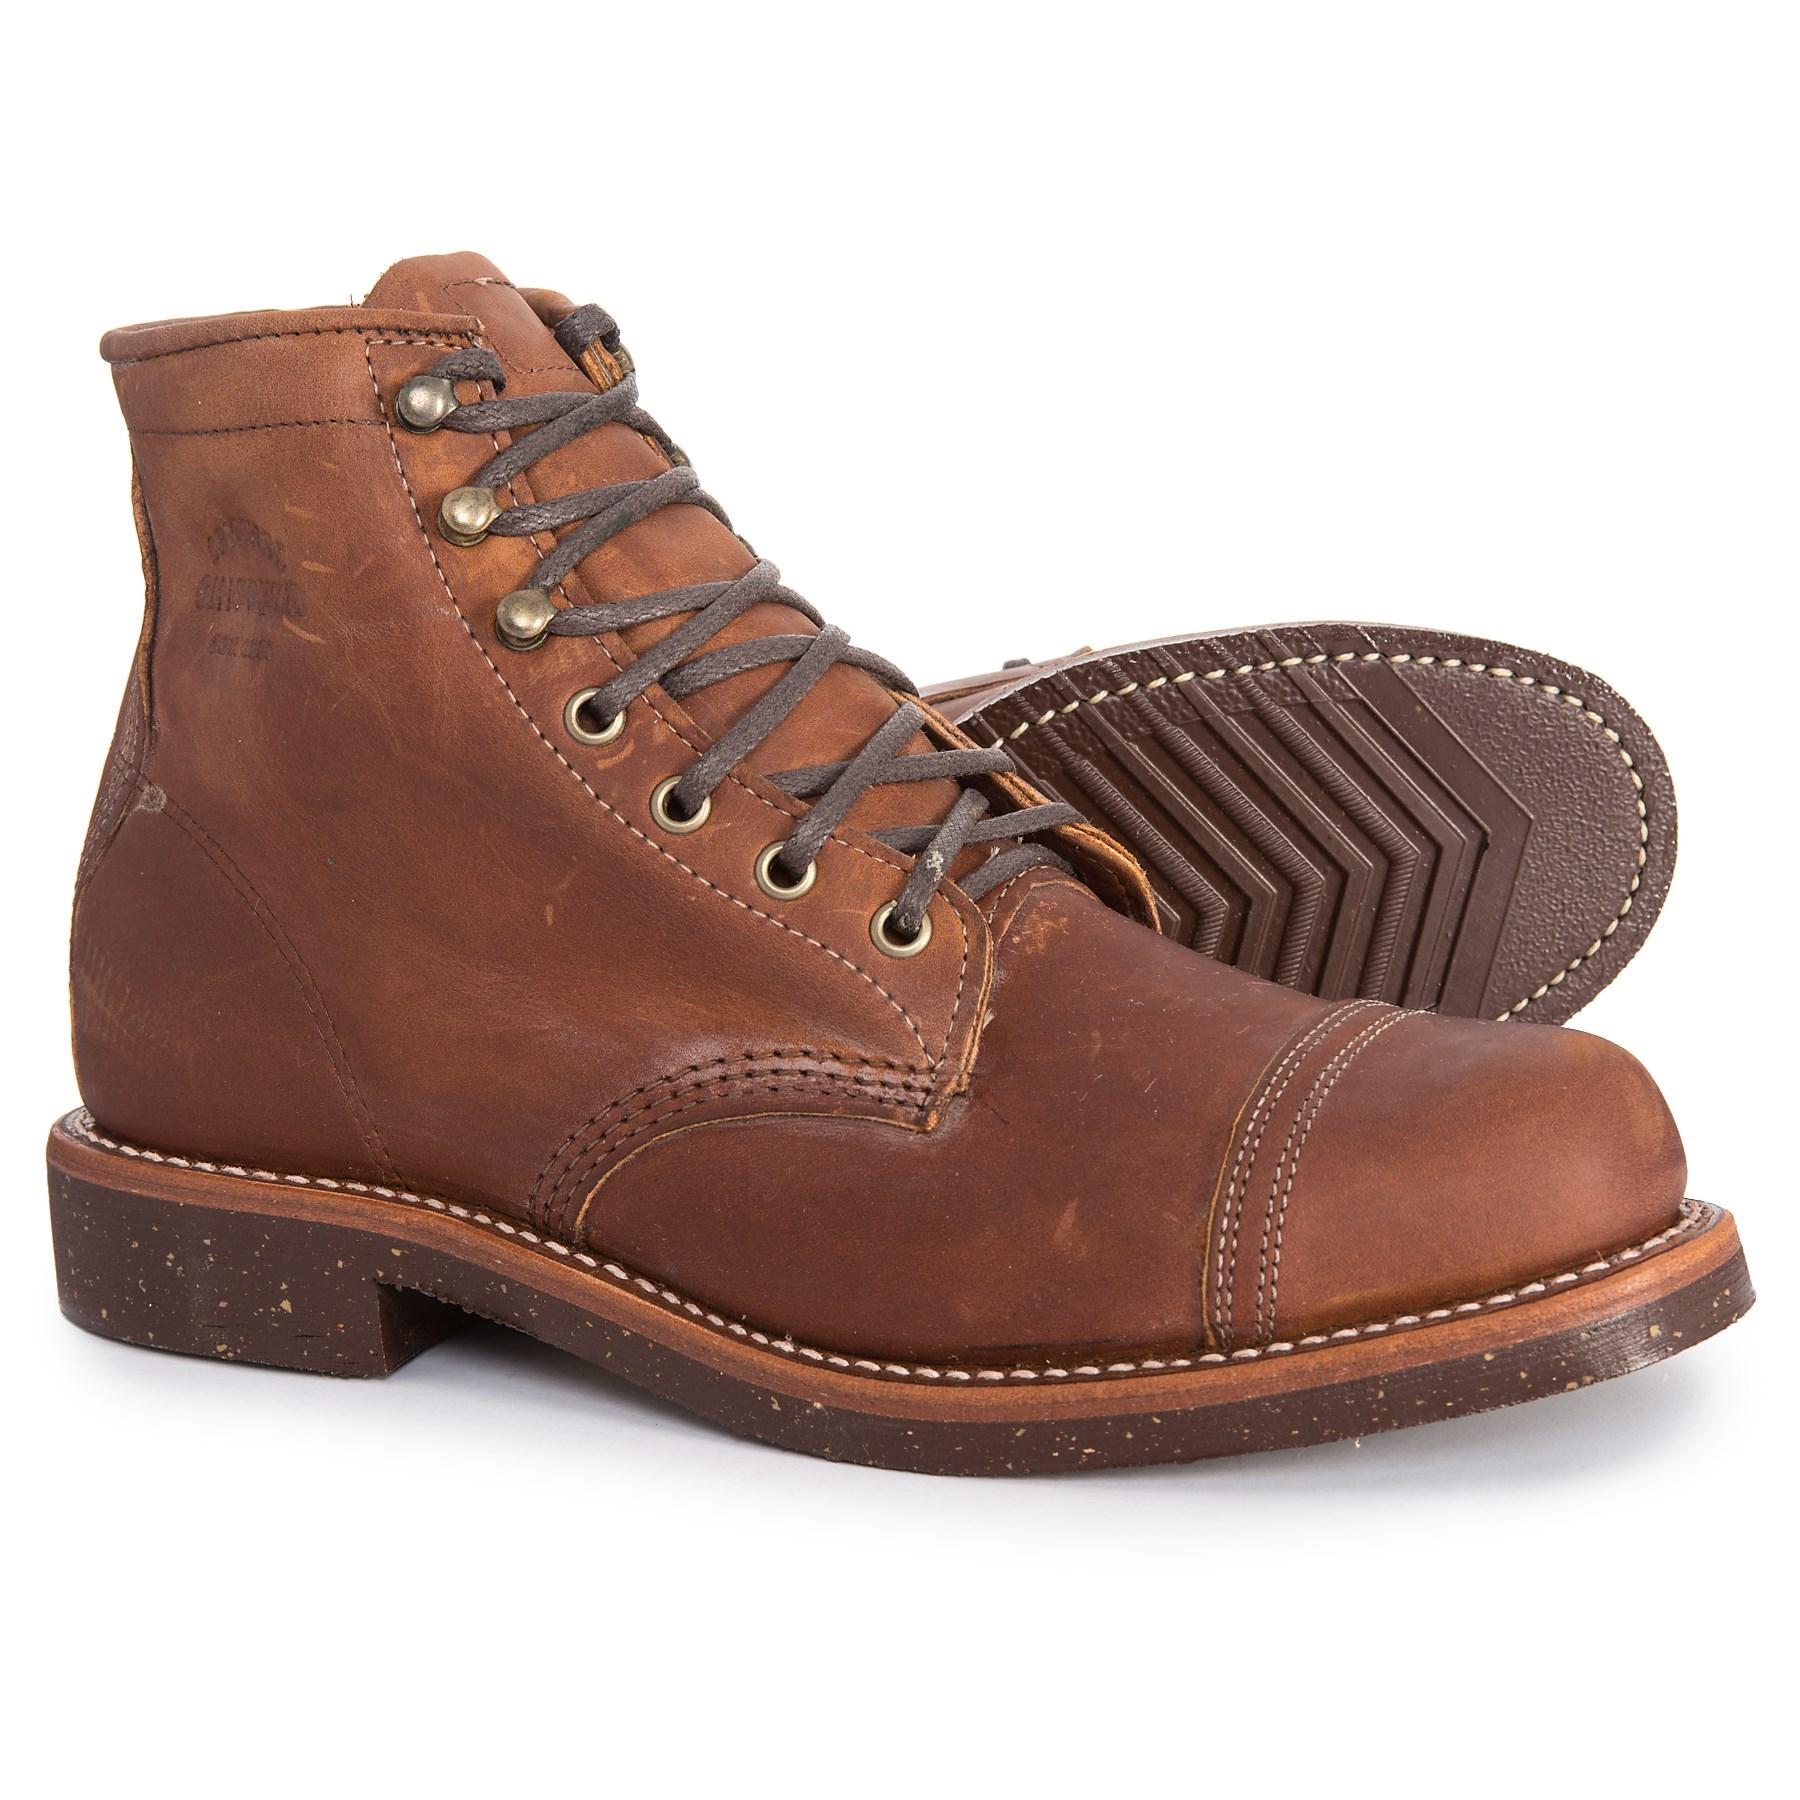 Cap Toe Boots in Brown for Men - Lyst